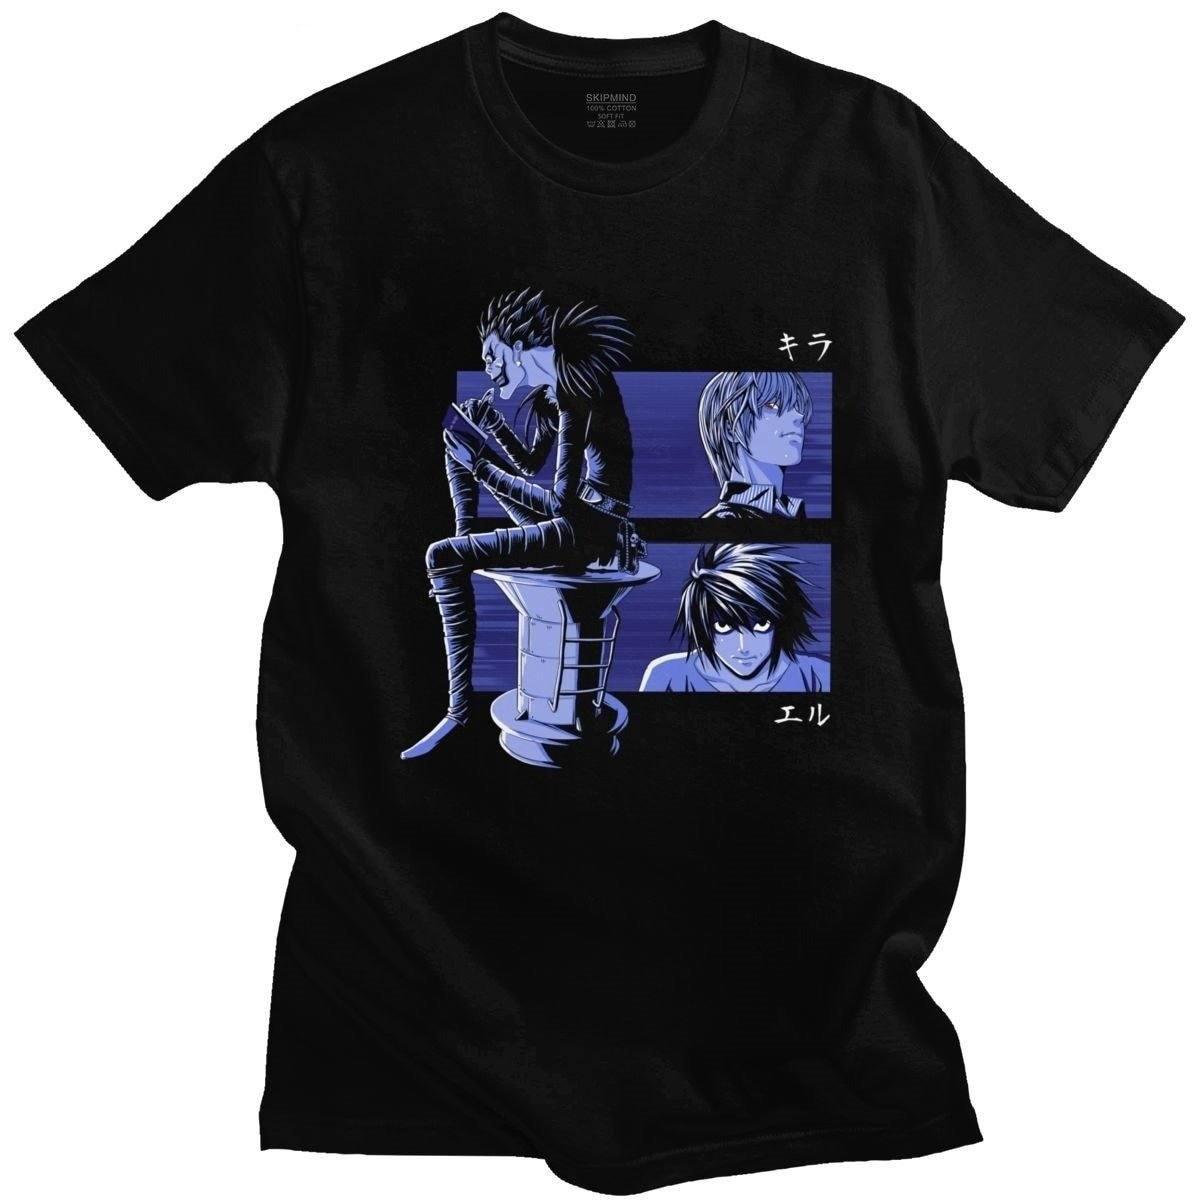 Death Note Ryuk T-Shirt